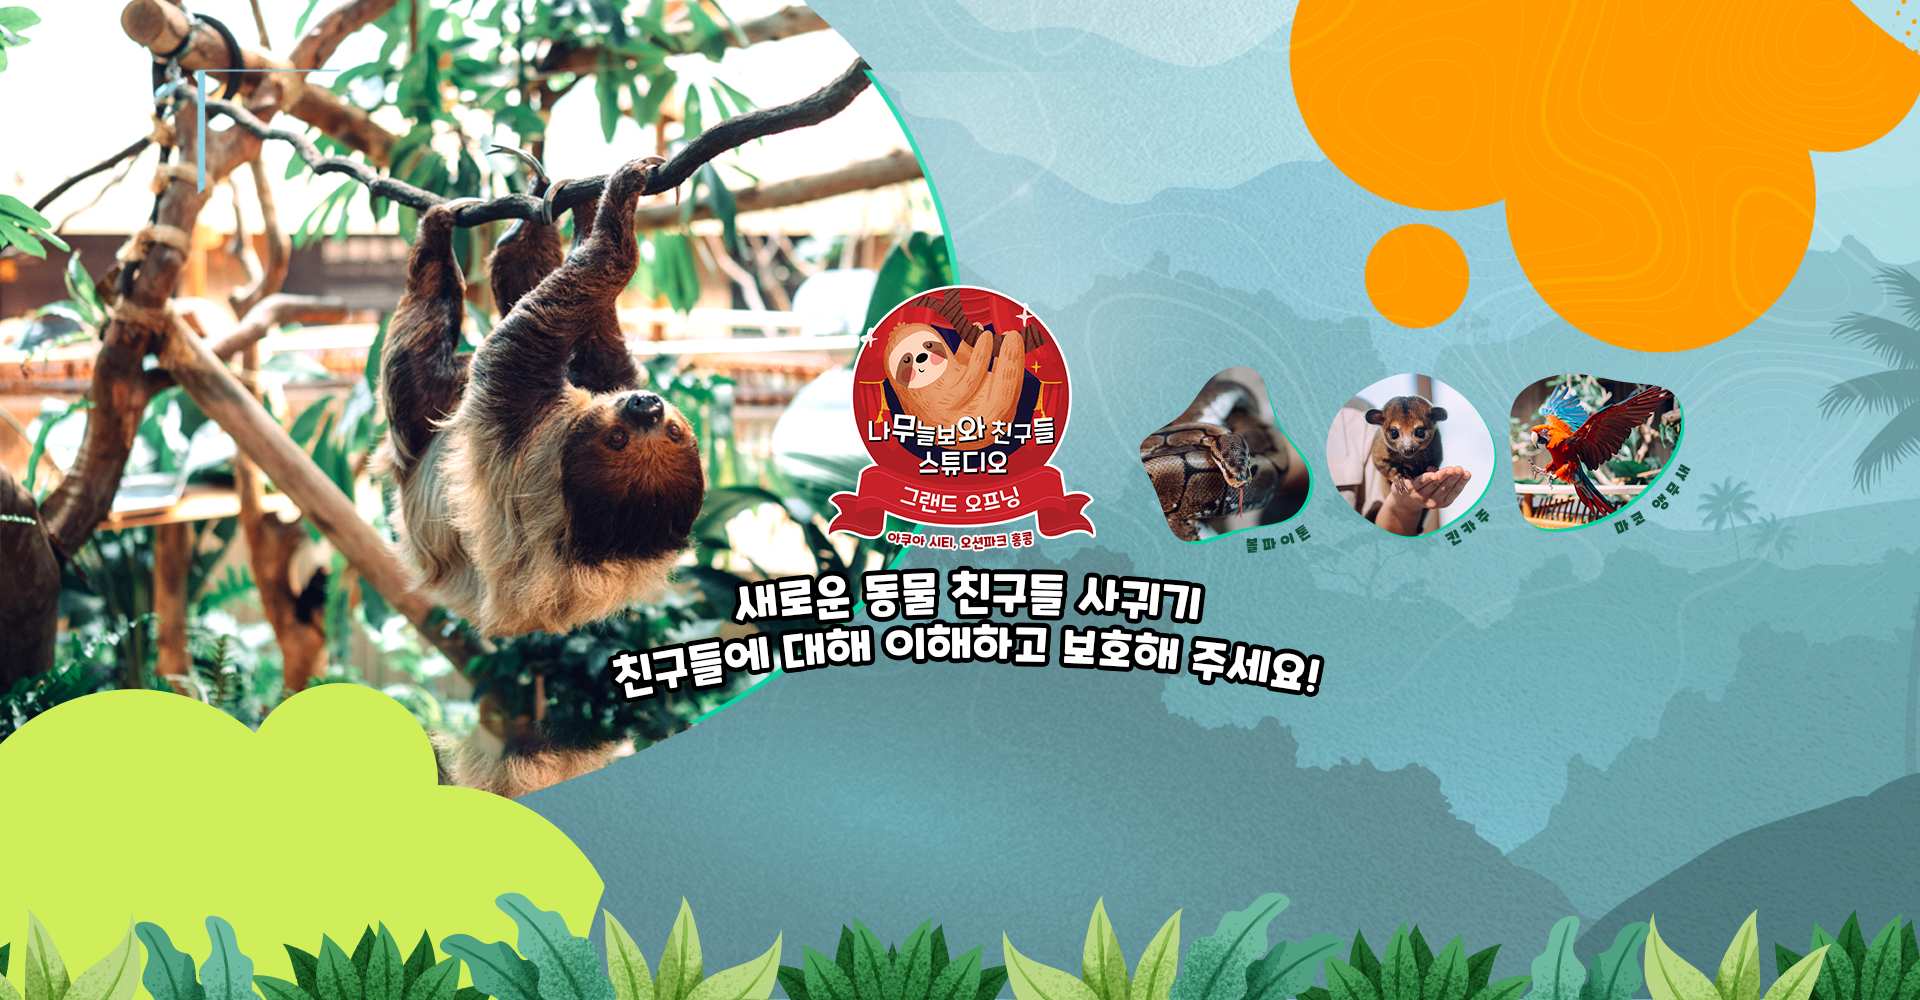 http://media.oceanpark.com.hk/files/s3fs-public/op-sloth-friends-studio-innerpage-banner-desktop-kr.jpg